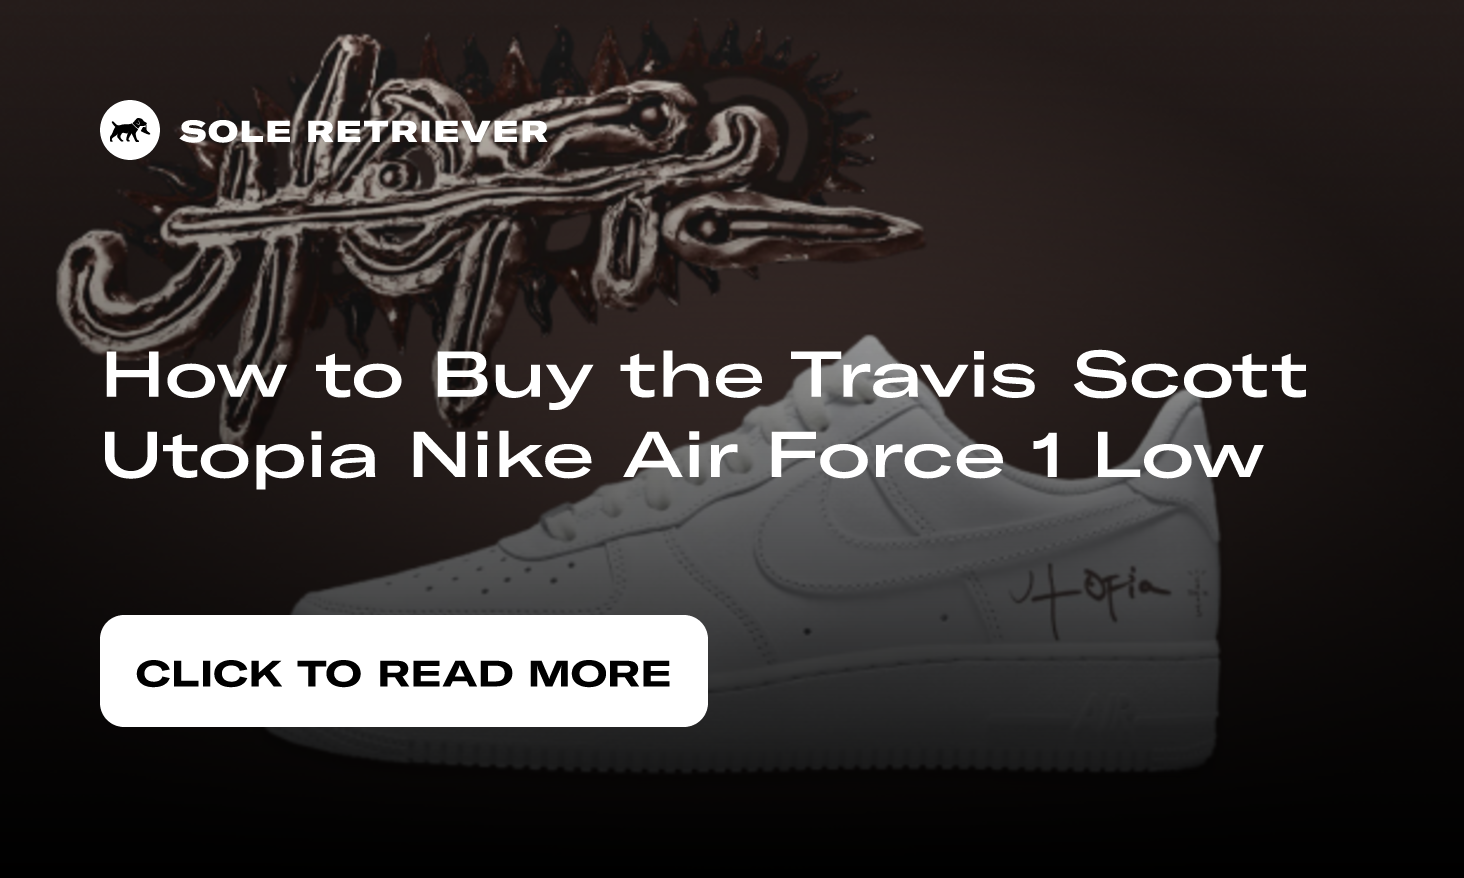 Nike Air Force 1 Travis Scott Utopia Raffles and Release Date